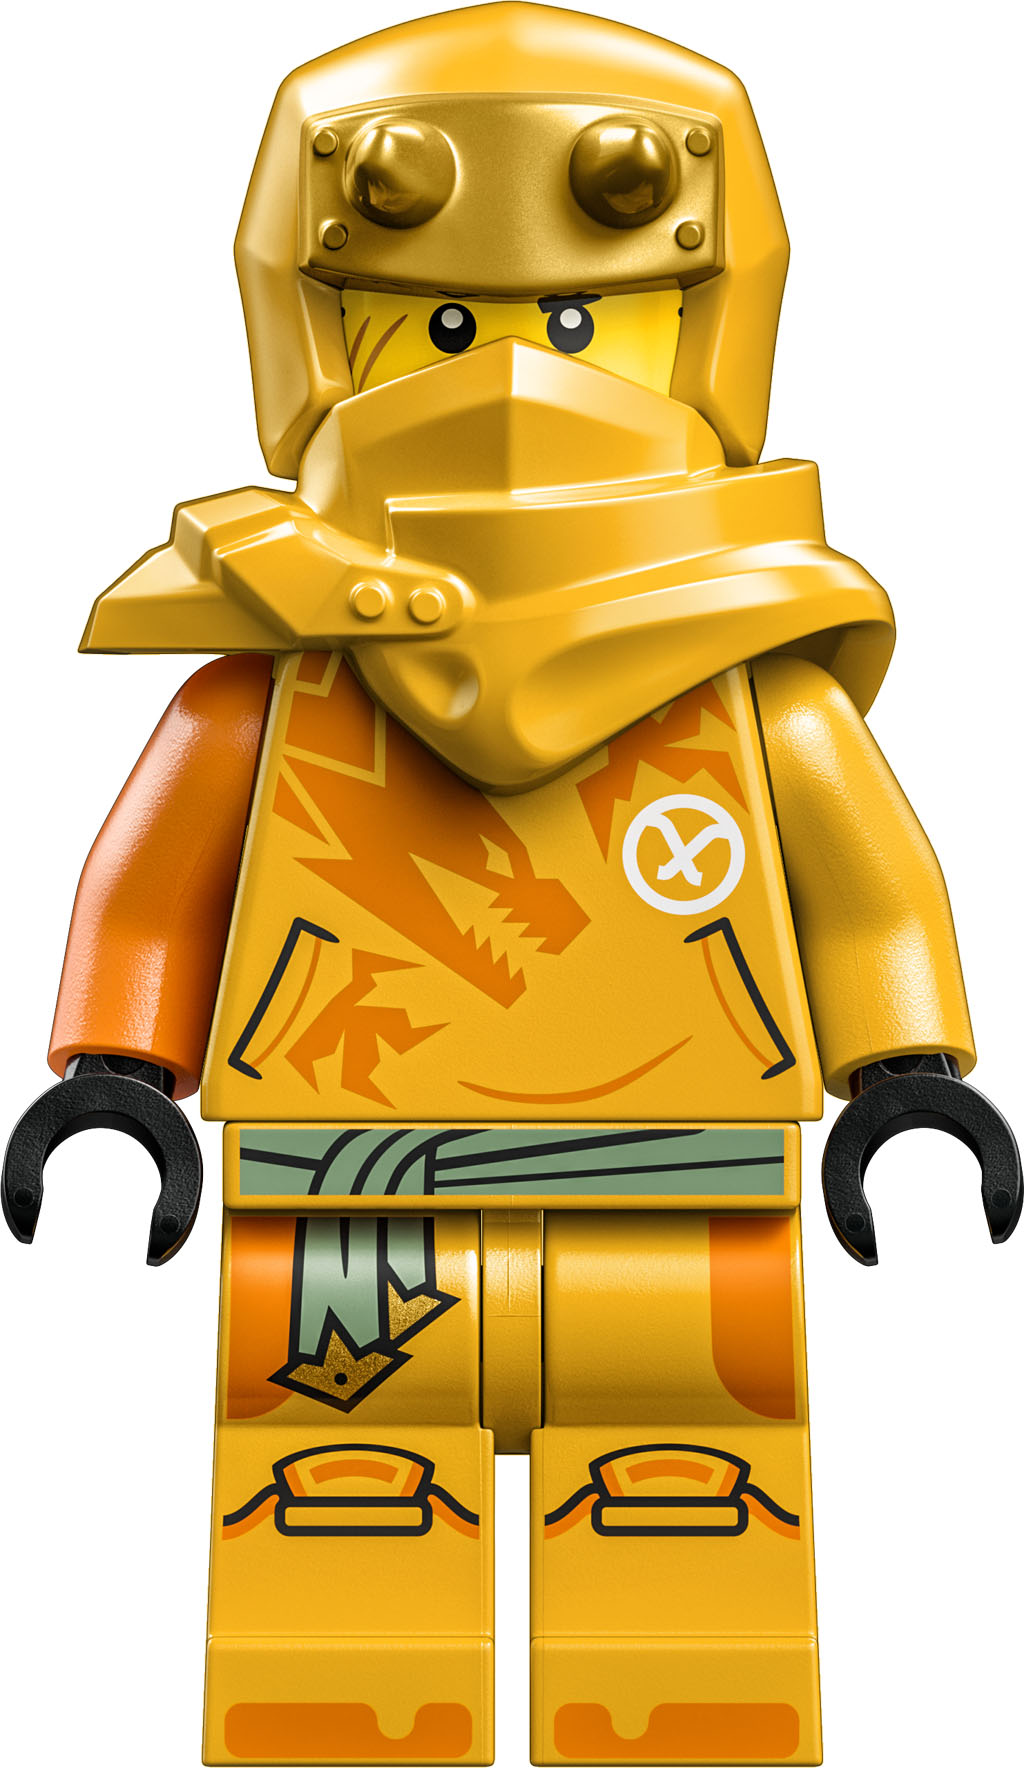 Figurine Lego® Ninjago - Dragons Rising - Lloyd